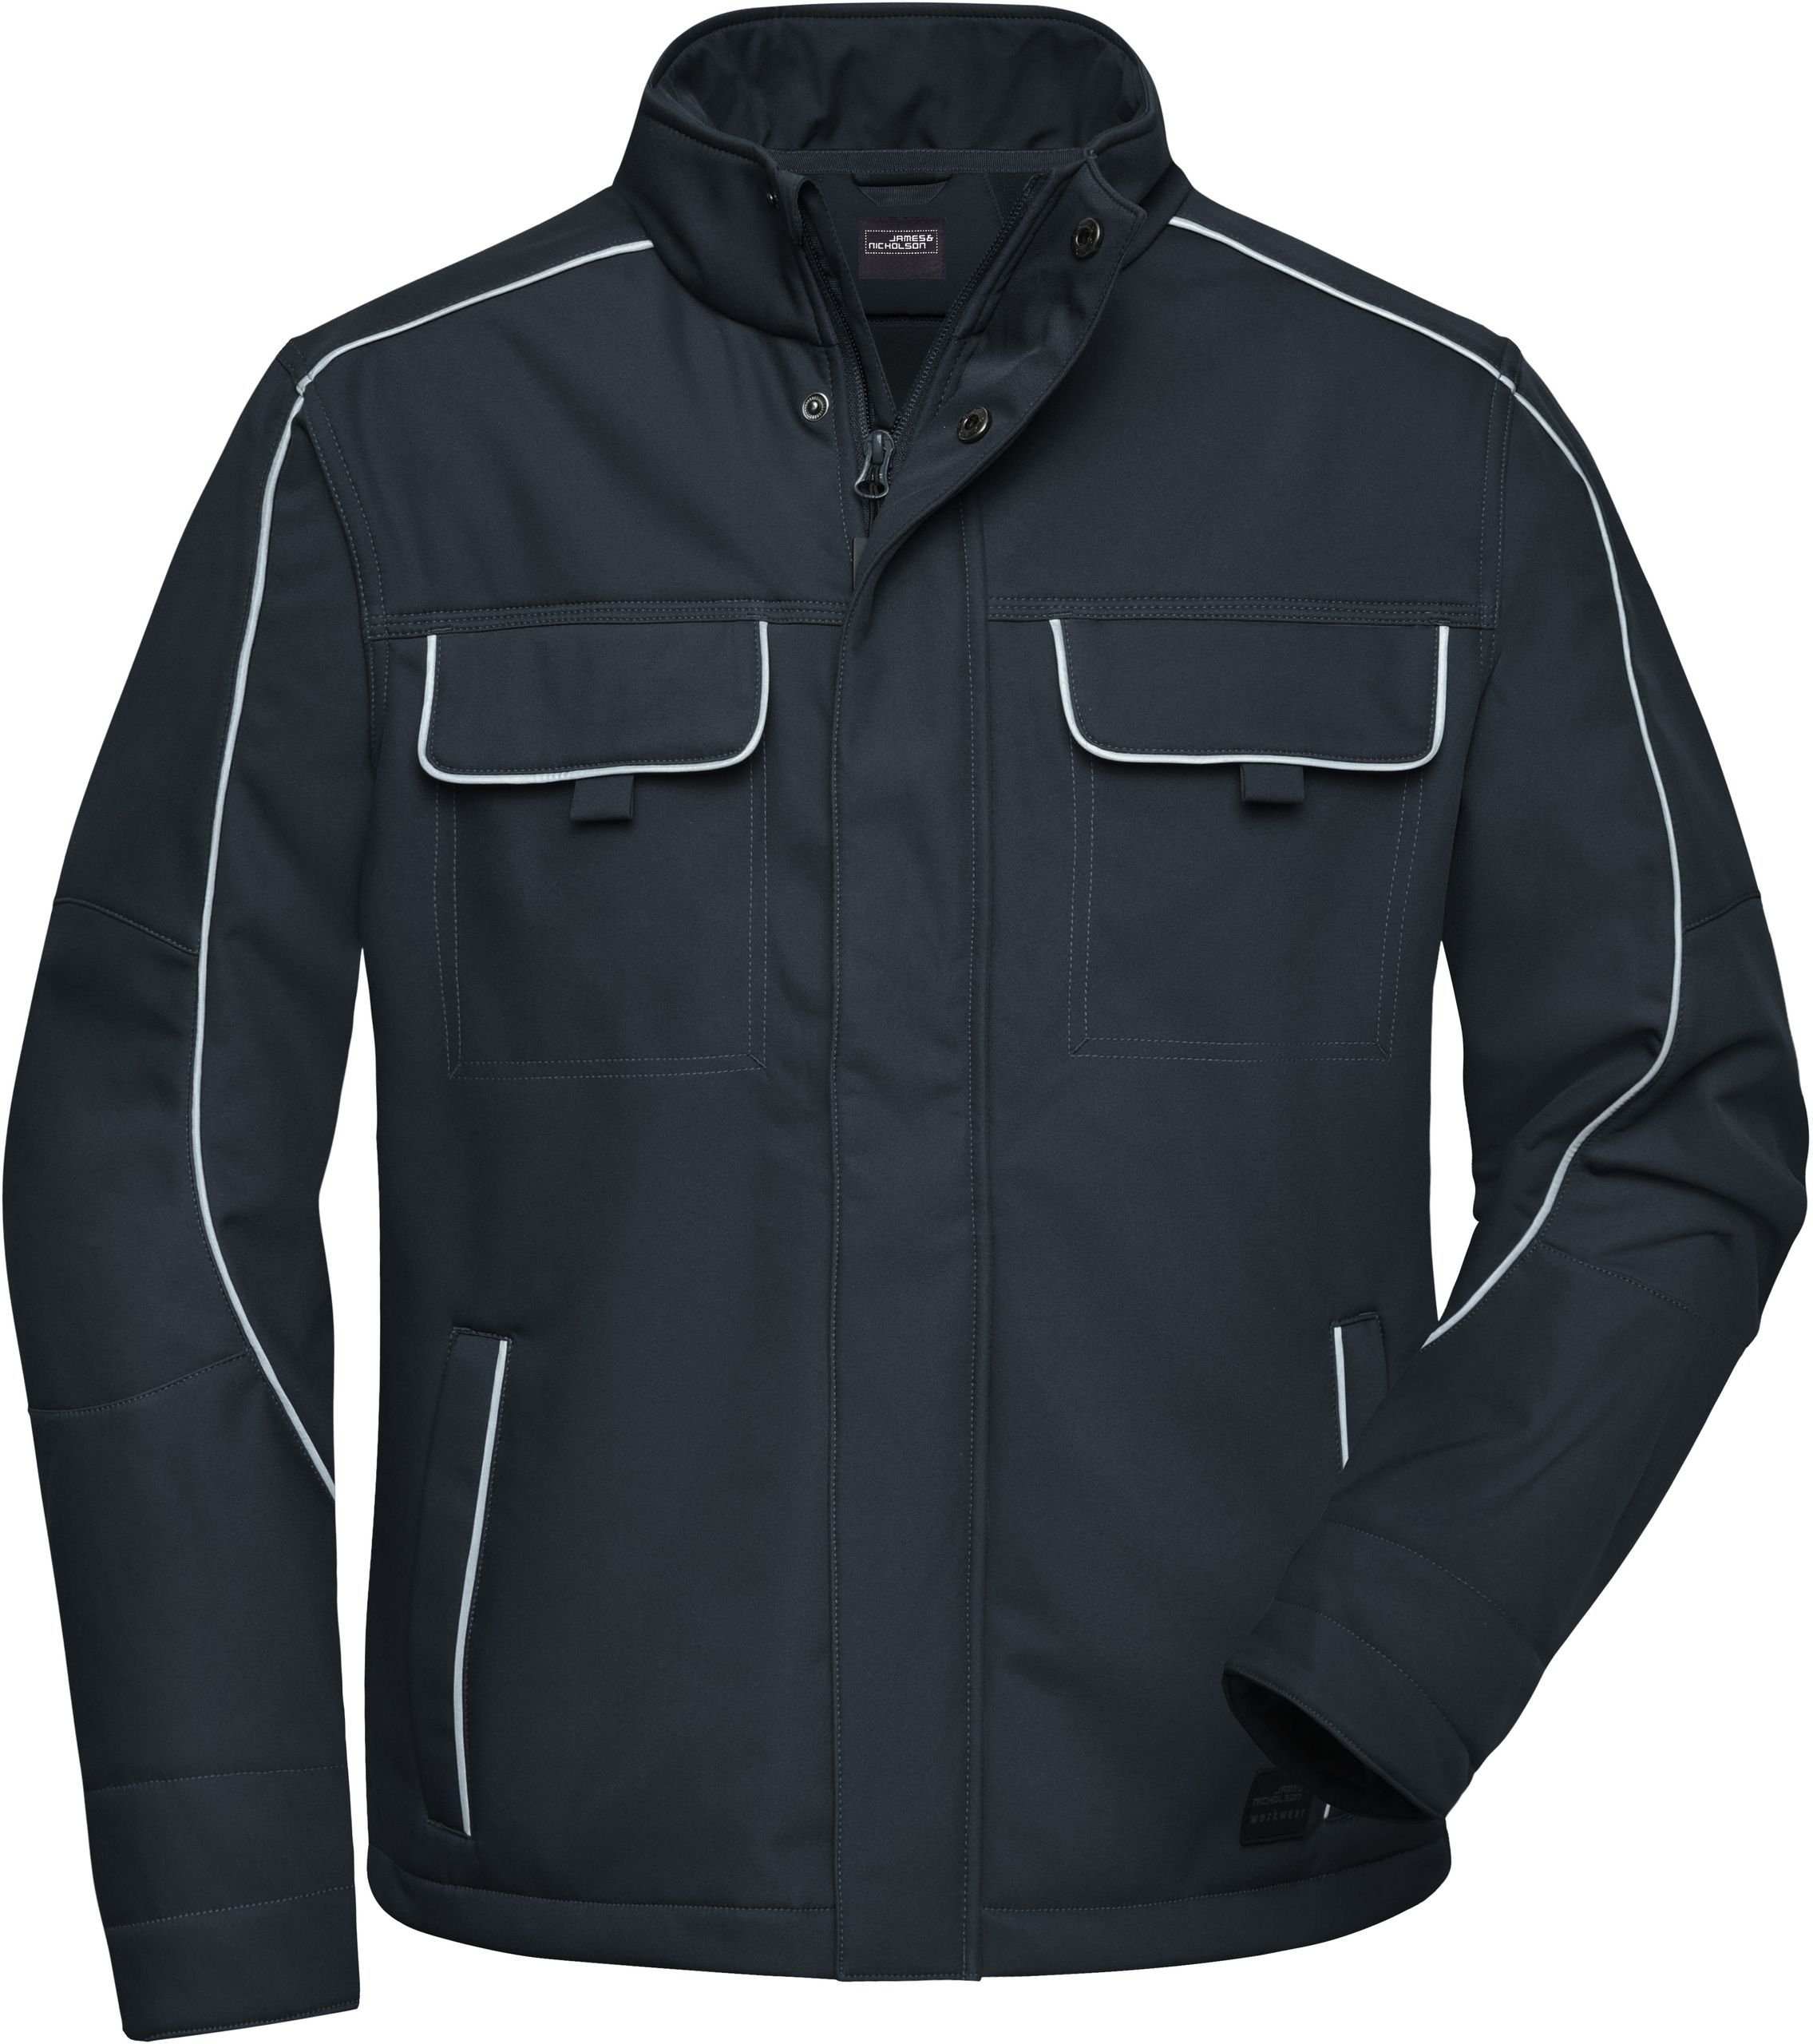 Olive Workwear auch Übergröße Nicholson Softshelljacke Jacke in FaS50884 & Softshell James